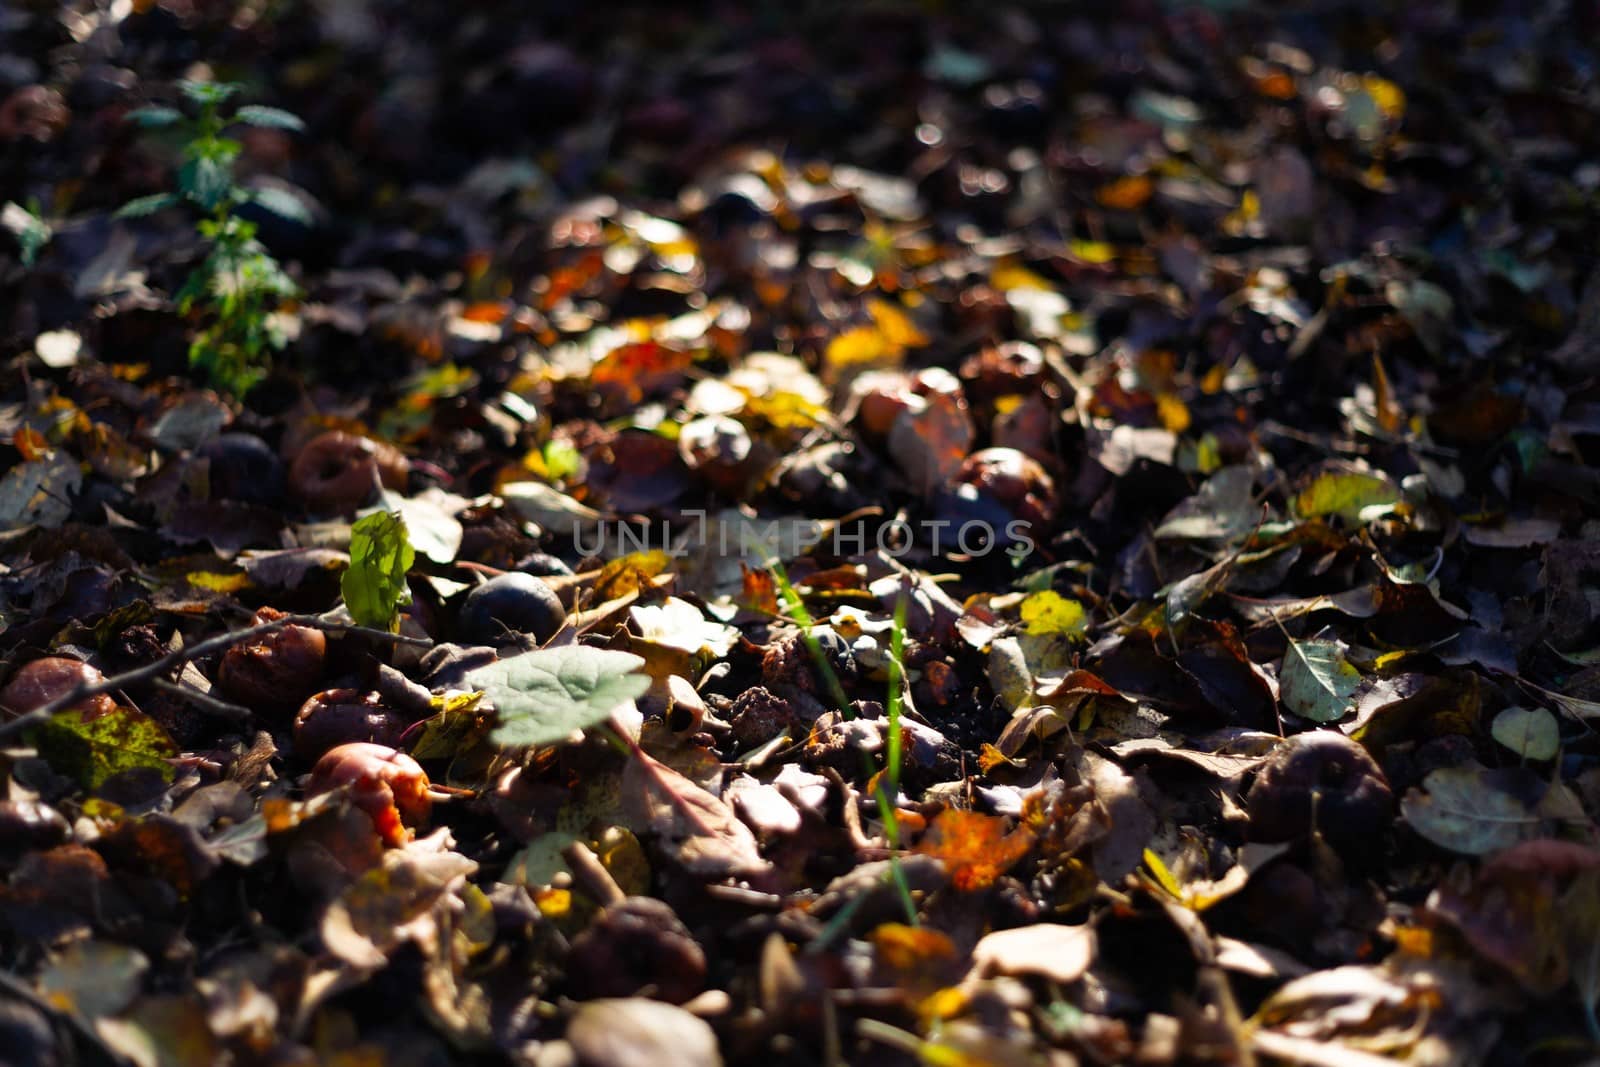 Rotten frozen apples on dark ground with orange leaves in apple garden. October frost.